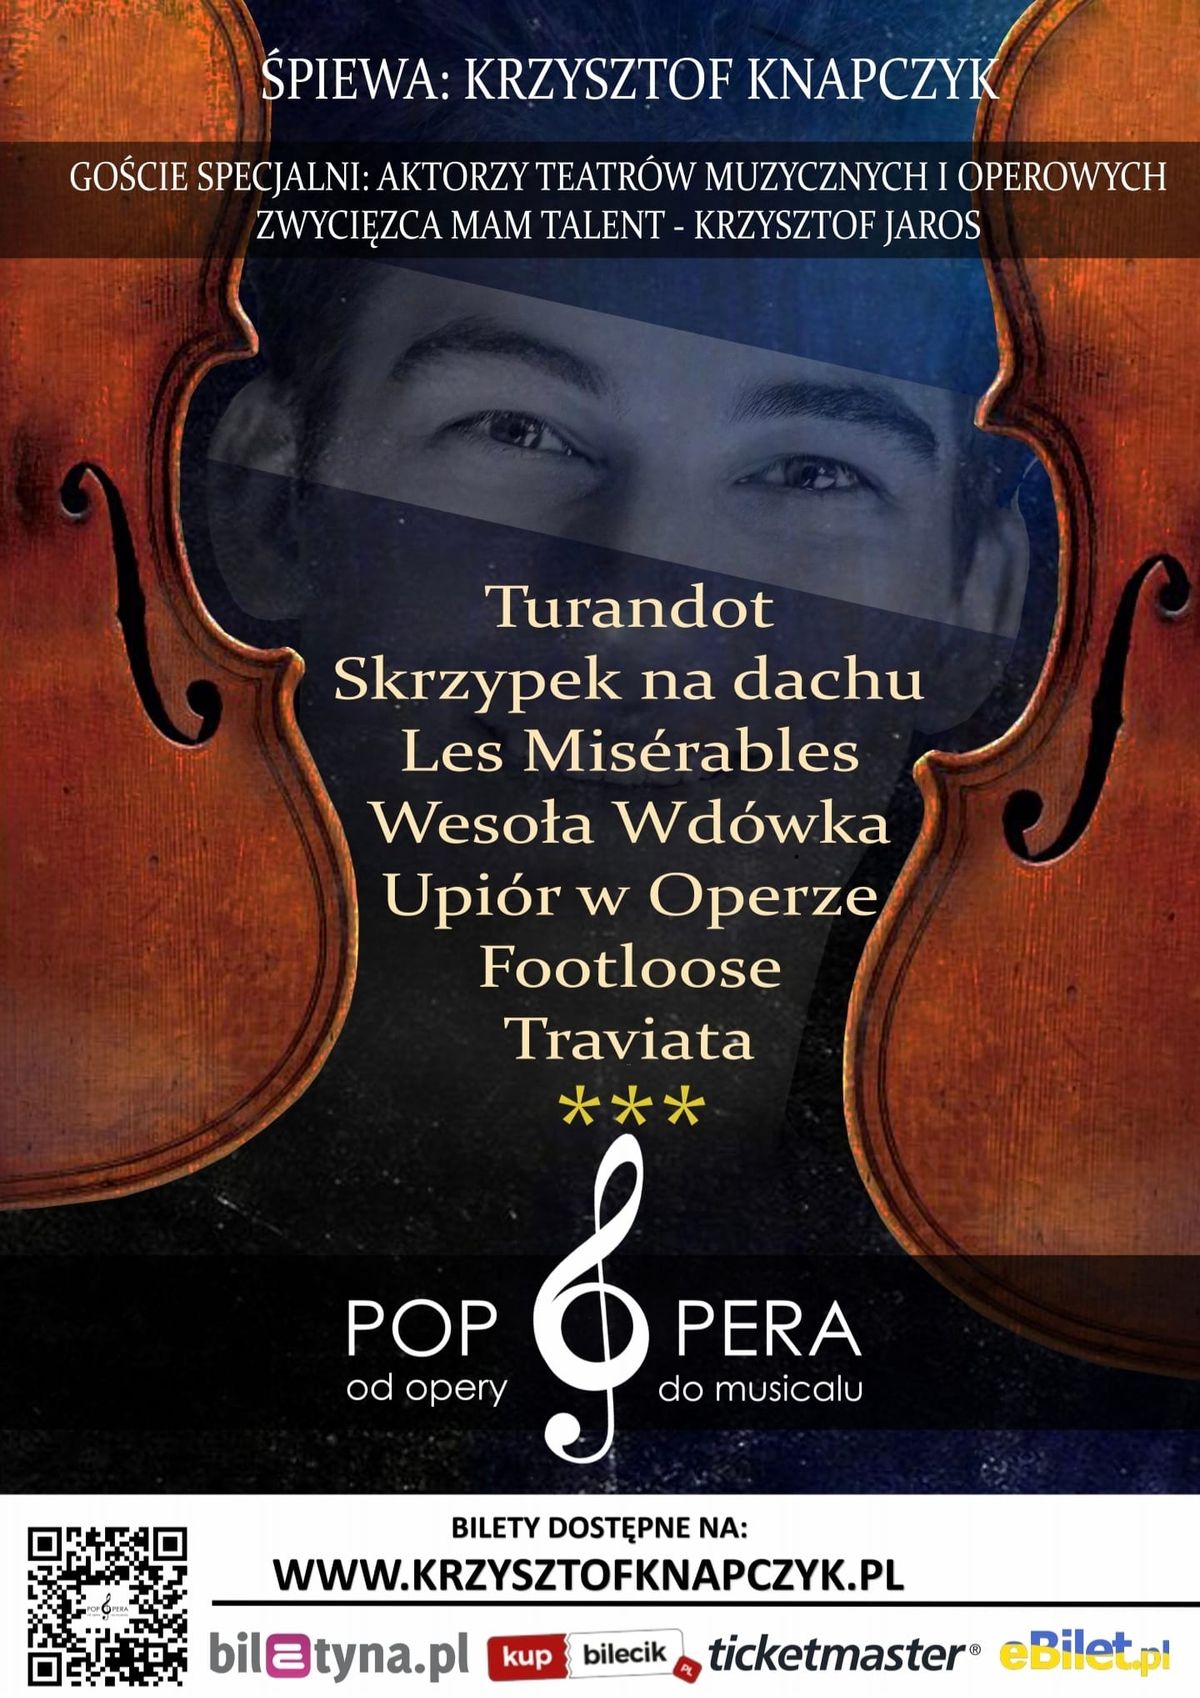 Pop Opera - od opery do musicalu - POZNA\u0143 Aula UAM - Aula Uniwersytetu Adama Mickiewicza